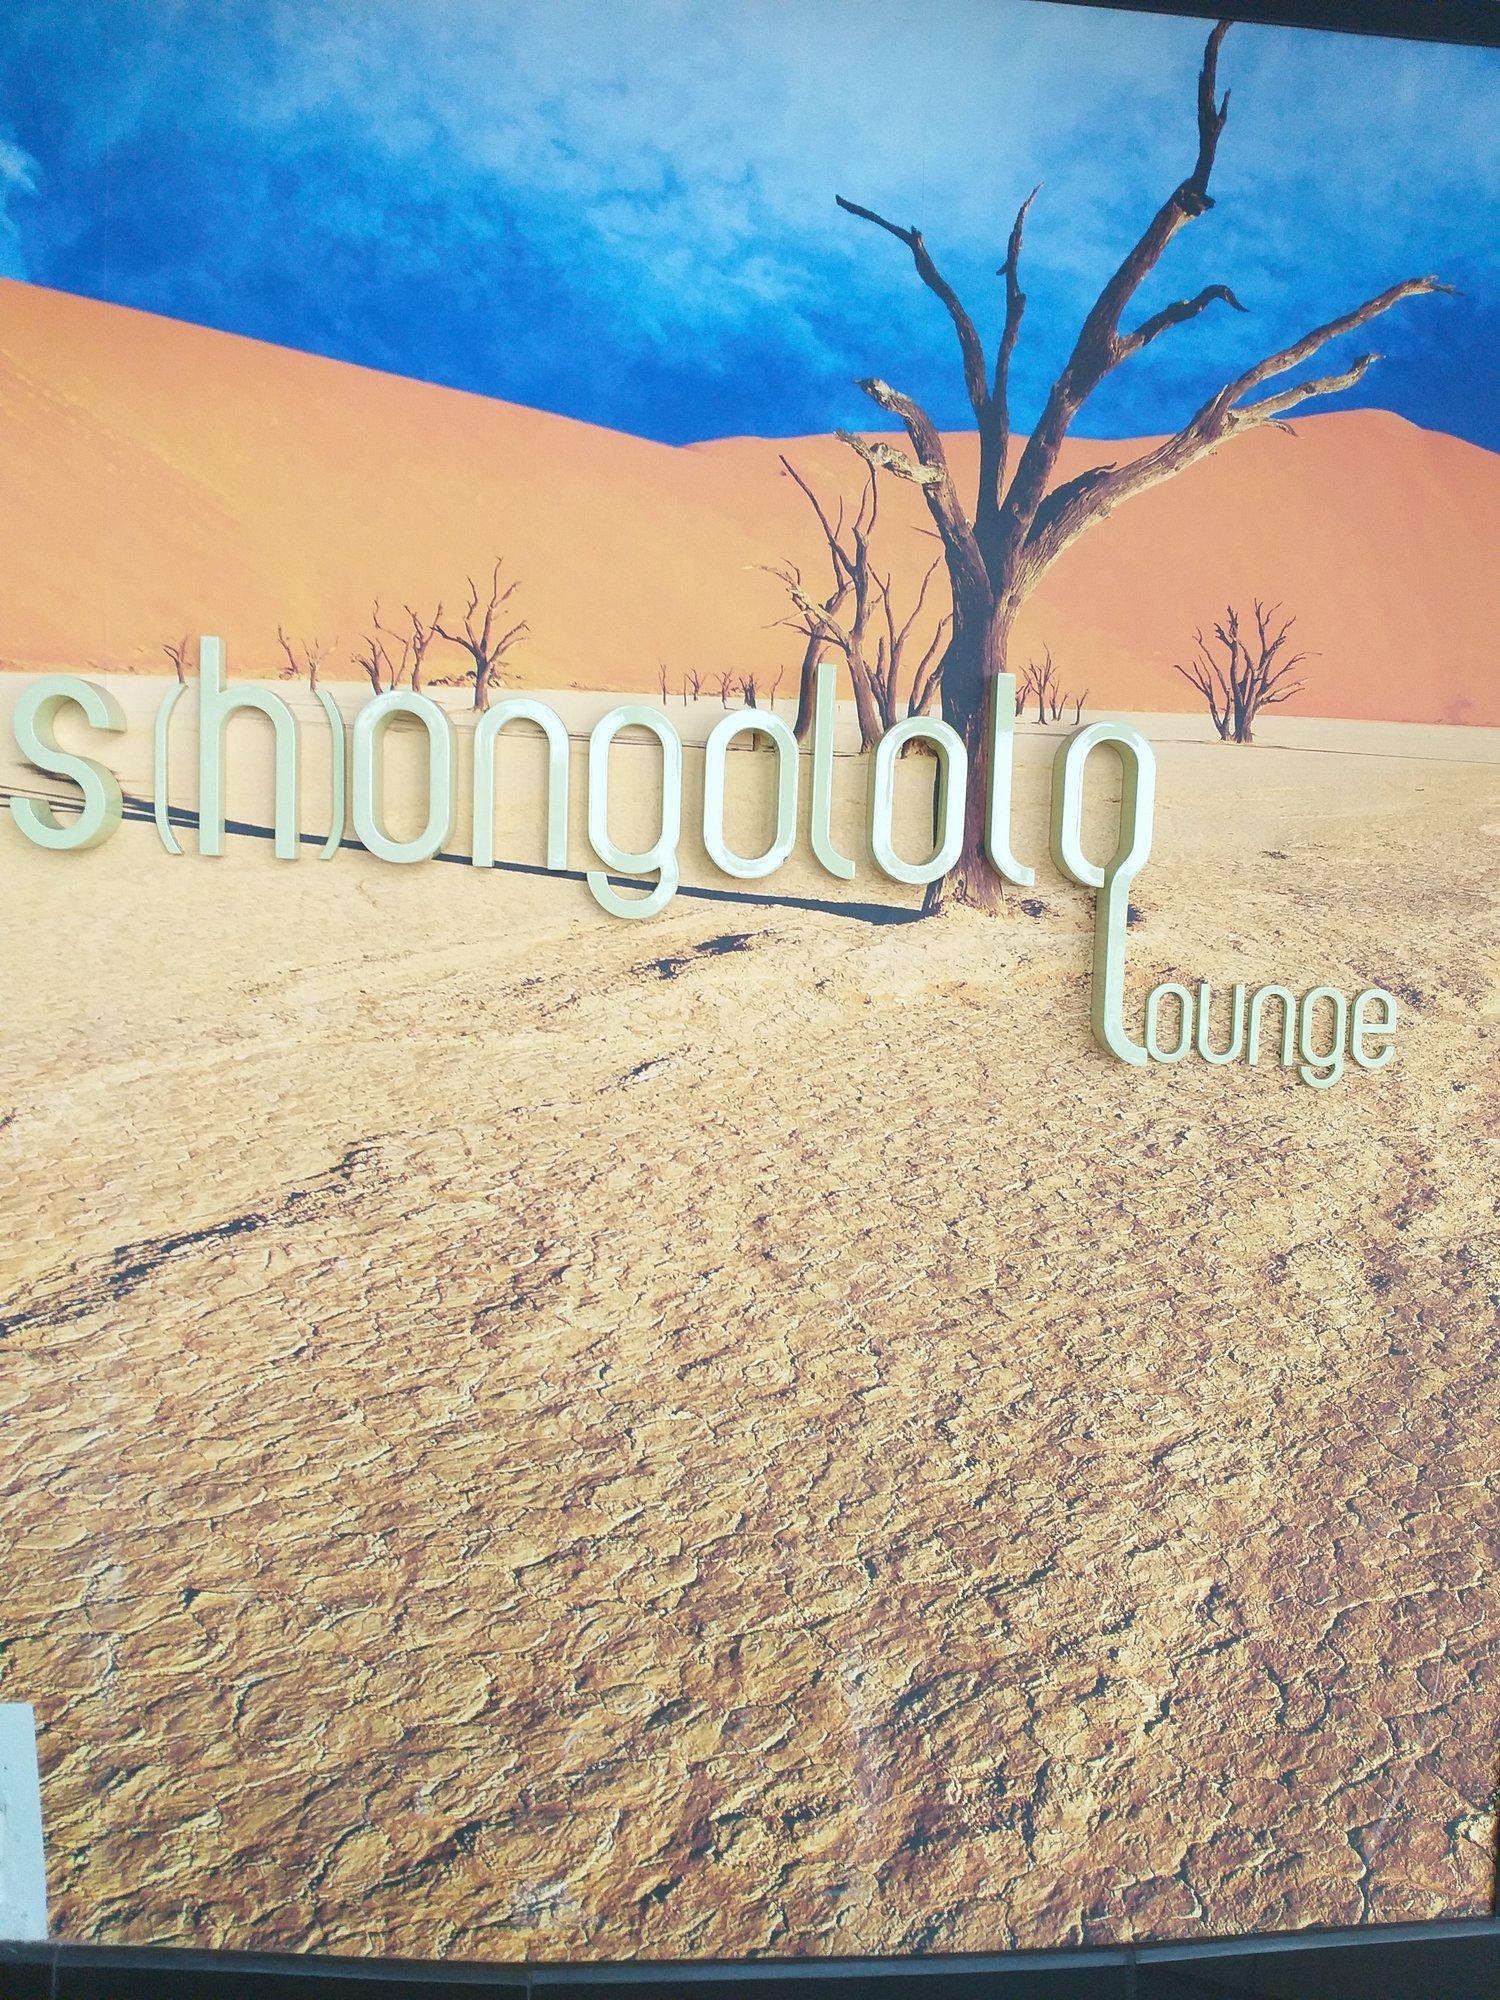 Shongololo Lounge image 63 of 69